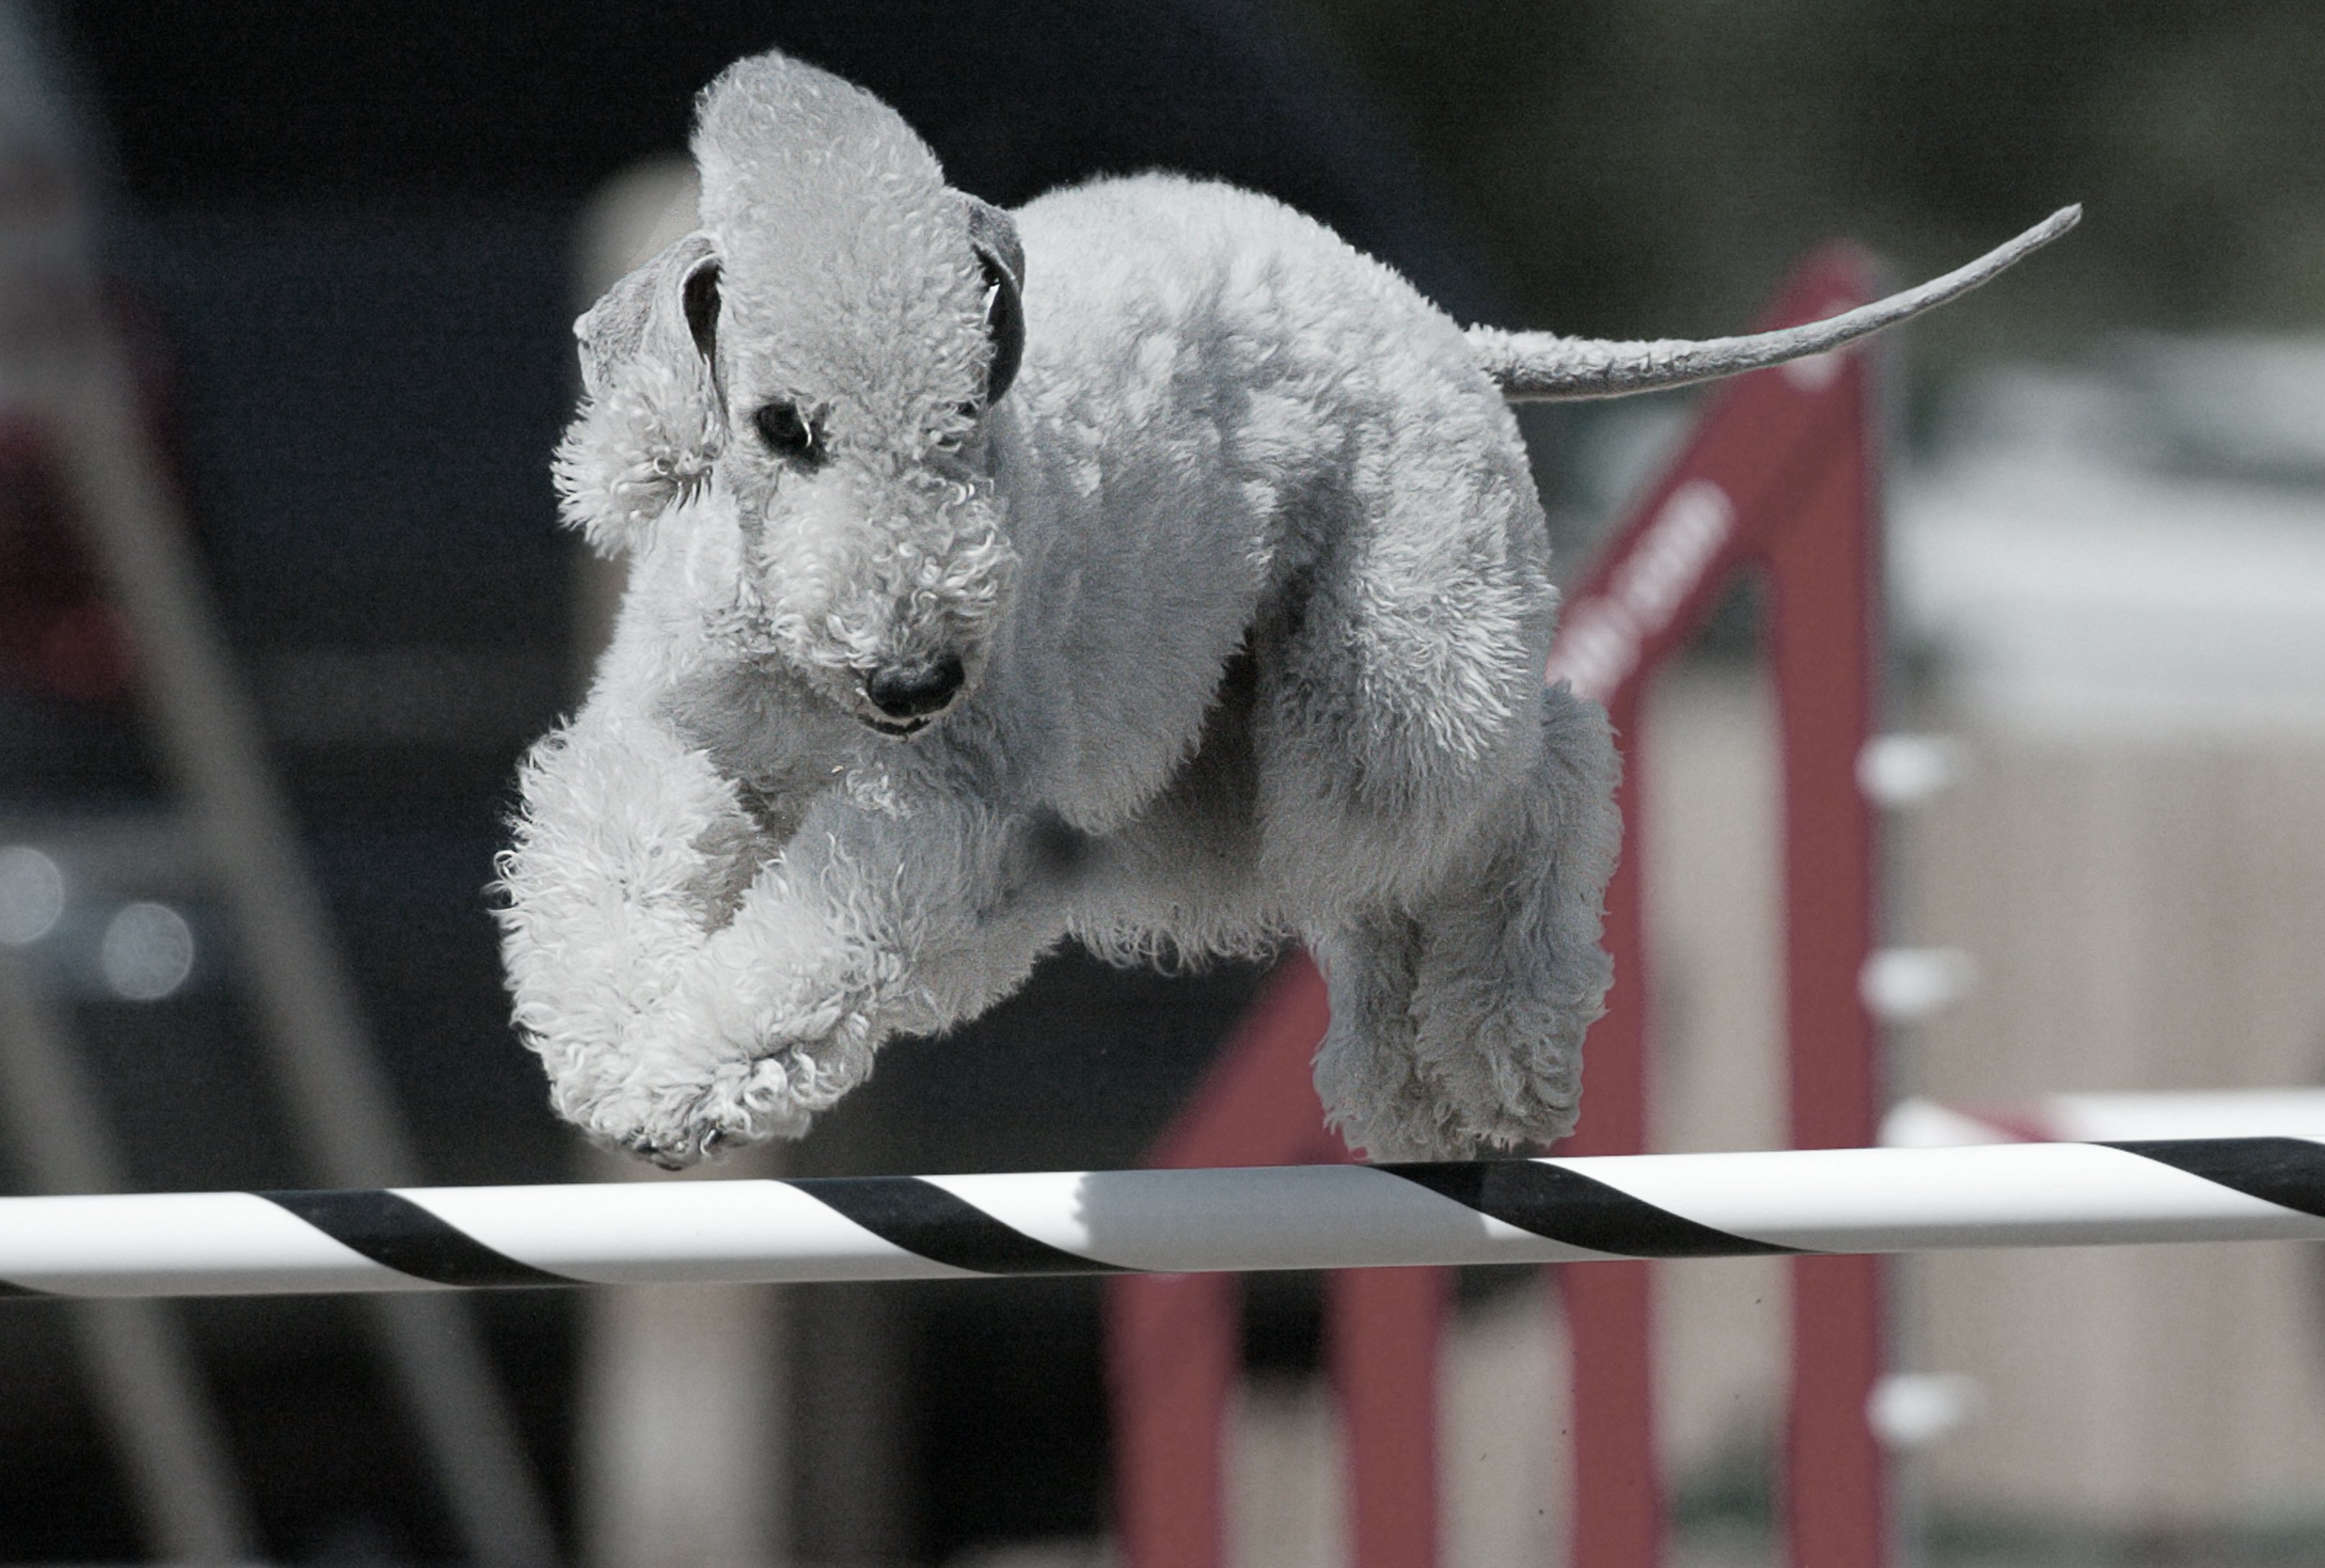 Bedlington Terrier
having fun jumping a pole
on an Agility course